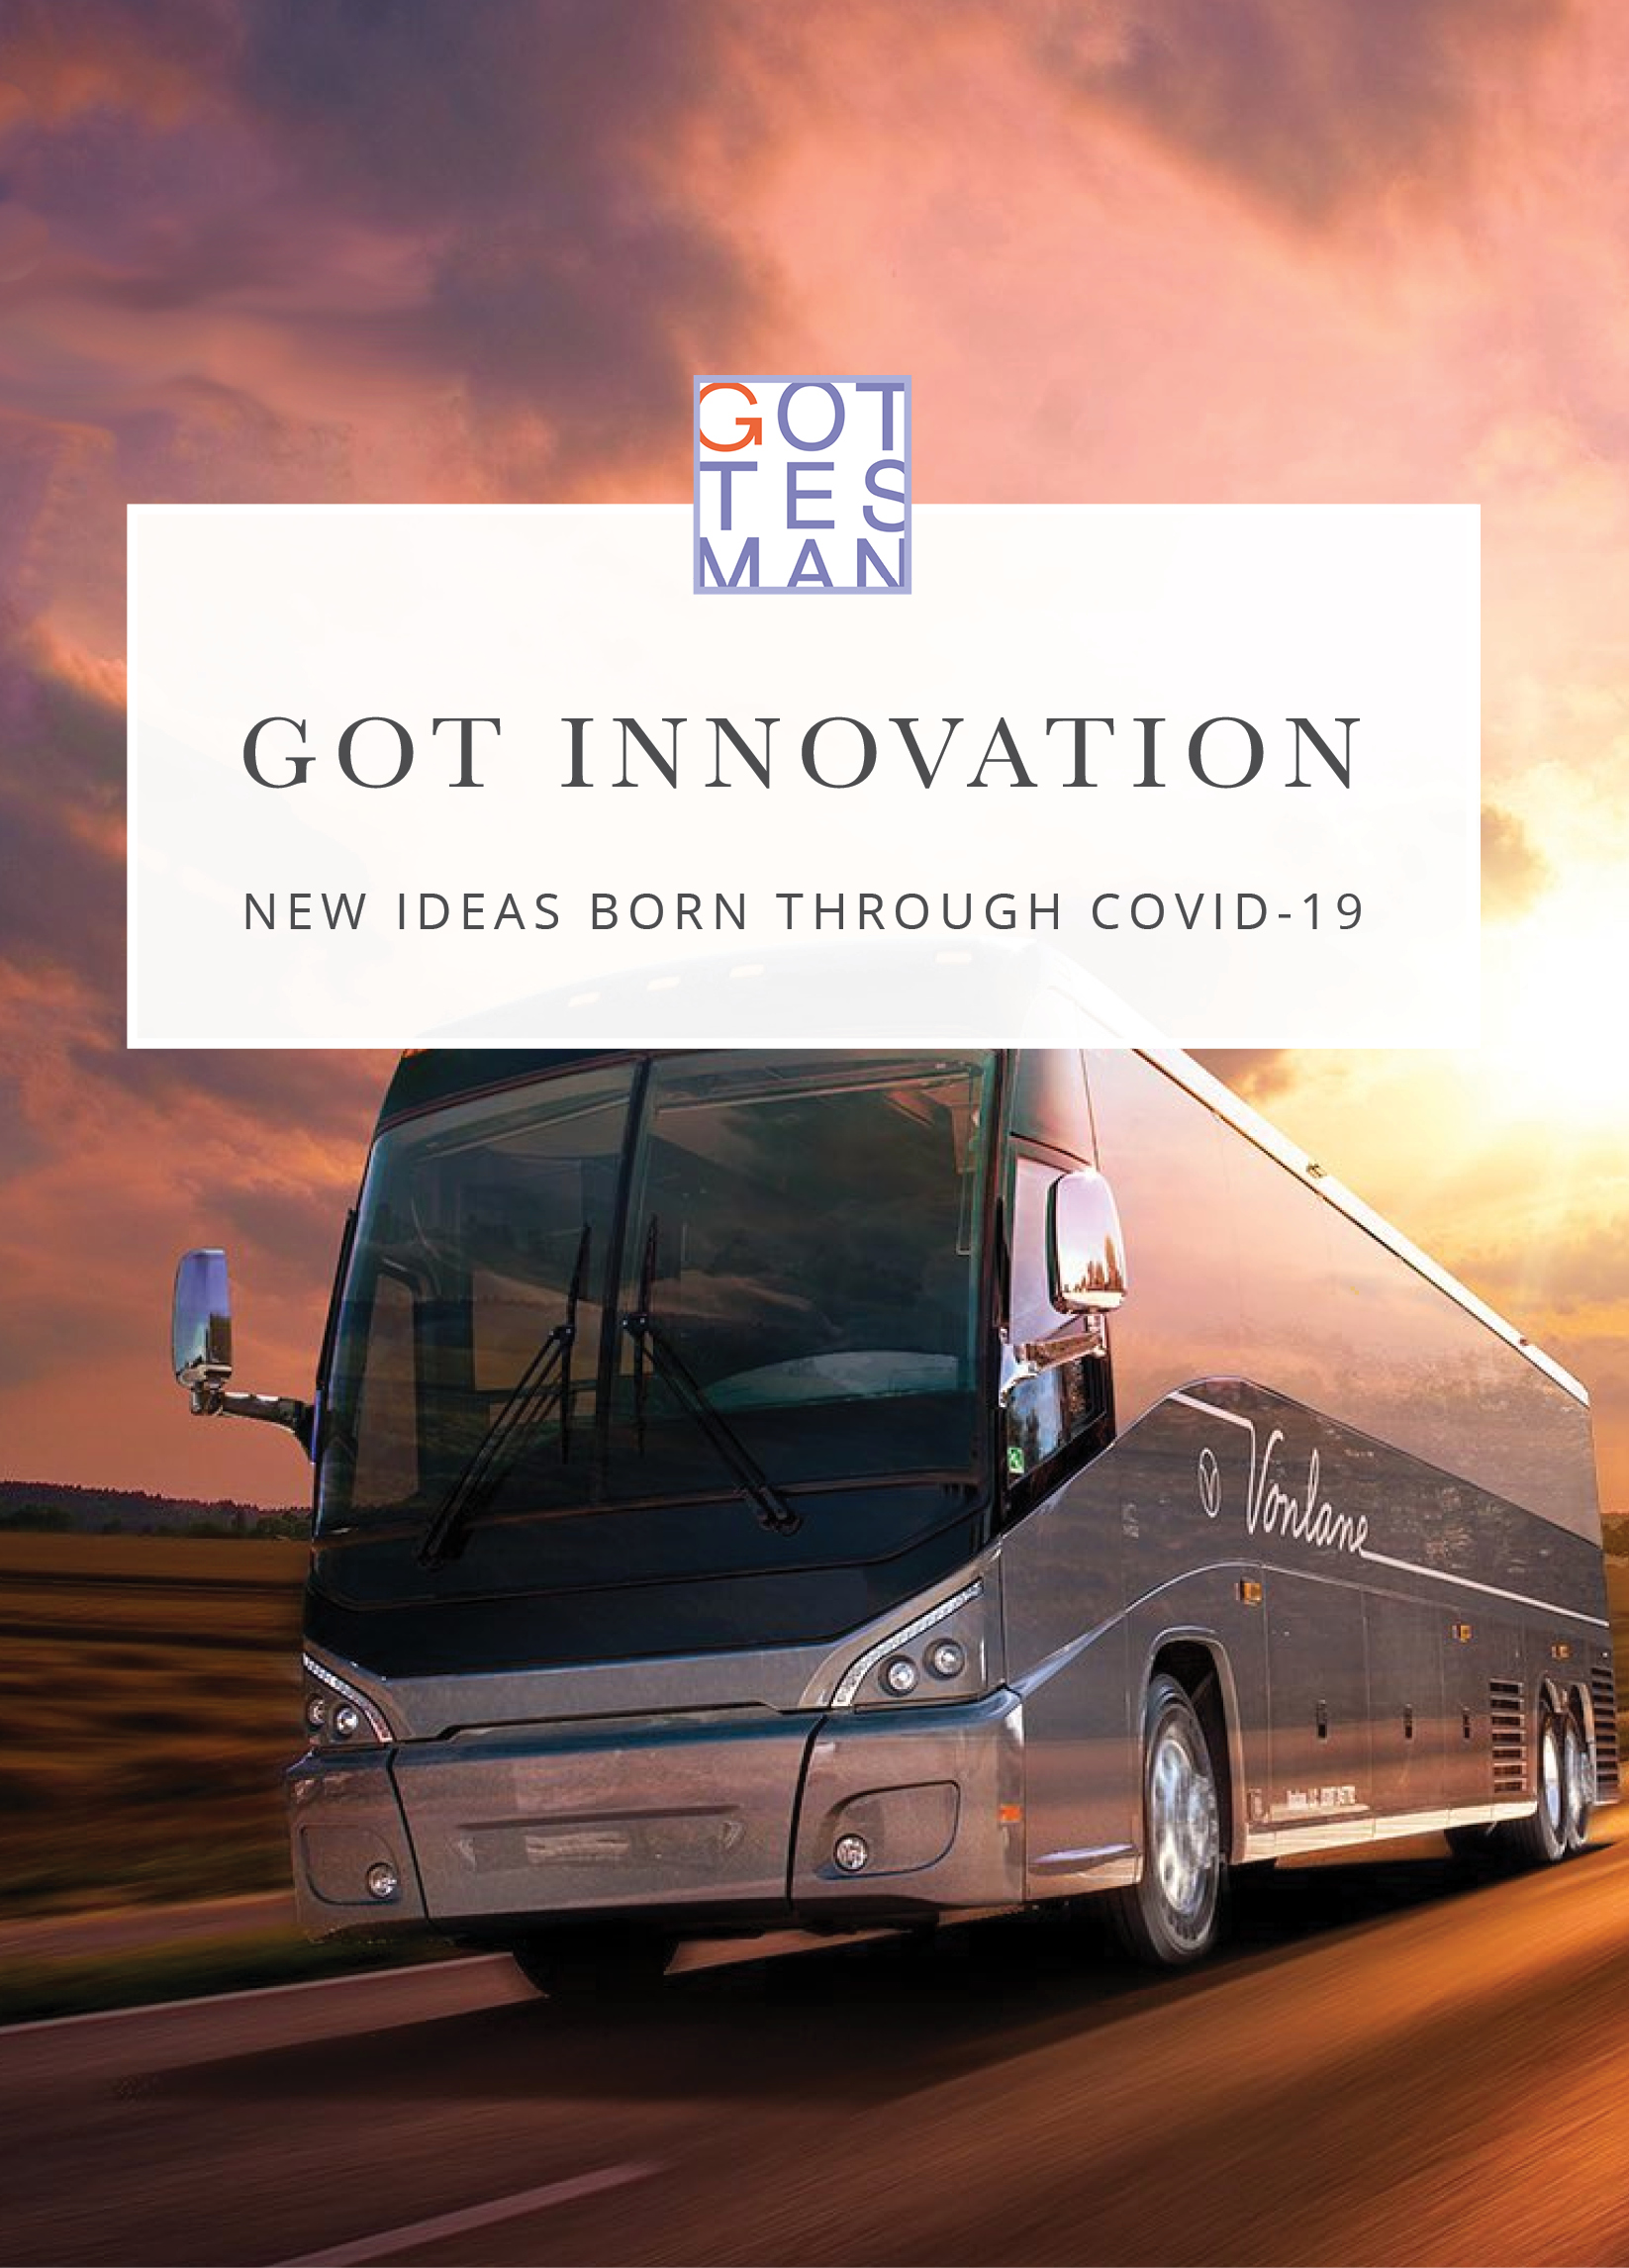 Vonlane bus with text overlay, "Got Innovation: New Ideas Born Through Covid-19"